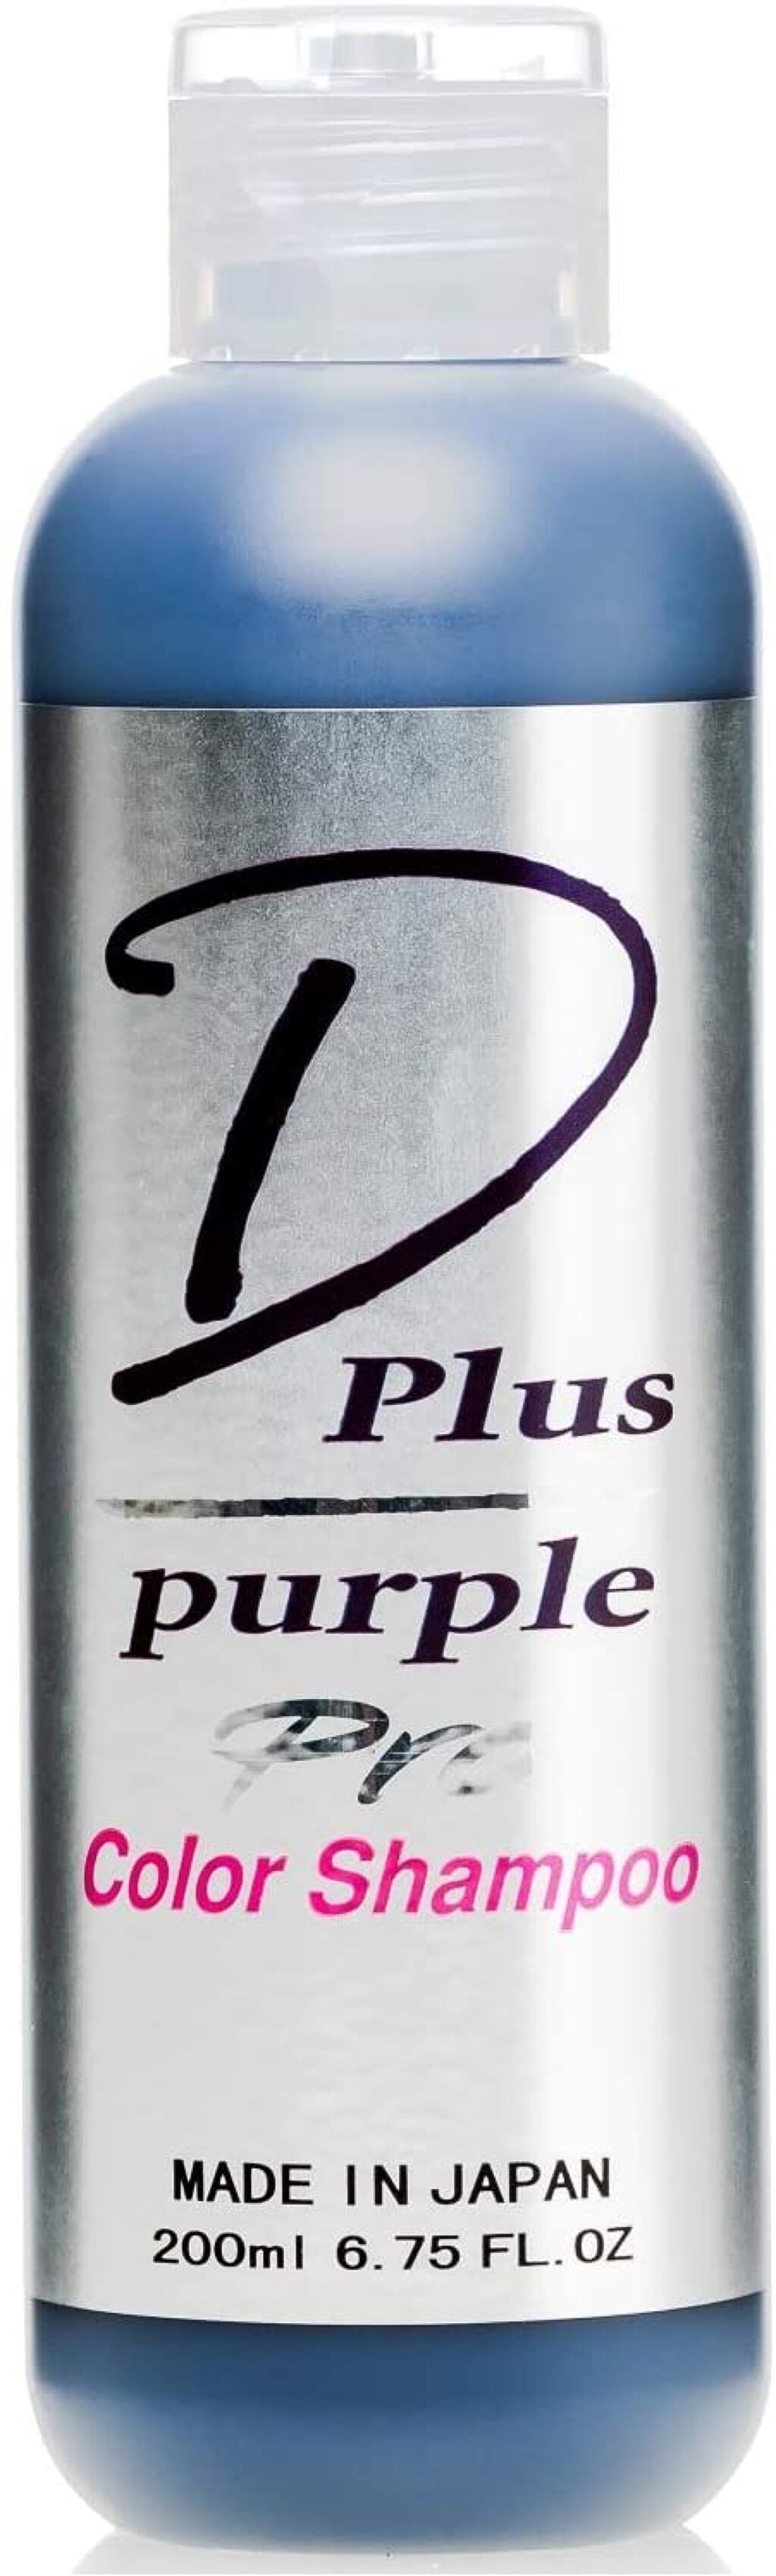 D plus 紫 ムラサキシャンプー  1本　N. エヌドット 類似 ムラシャン